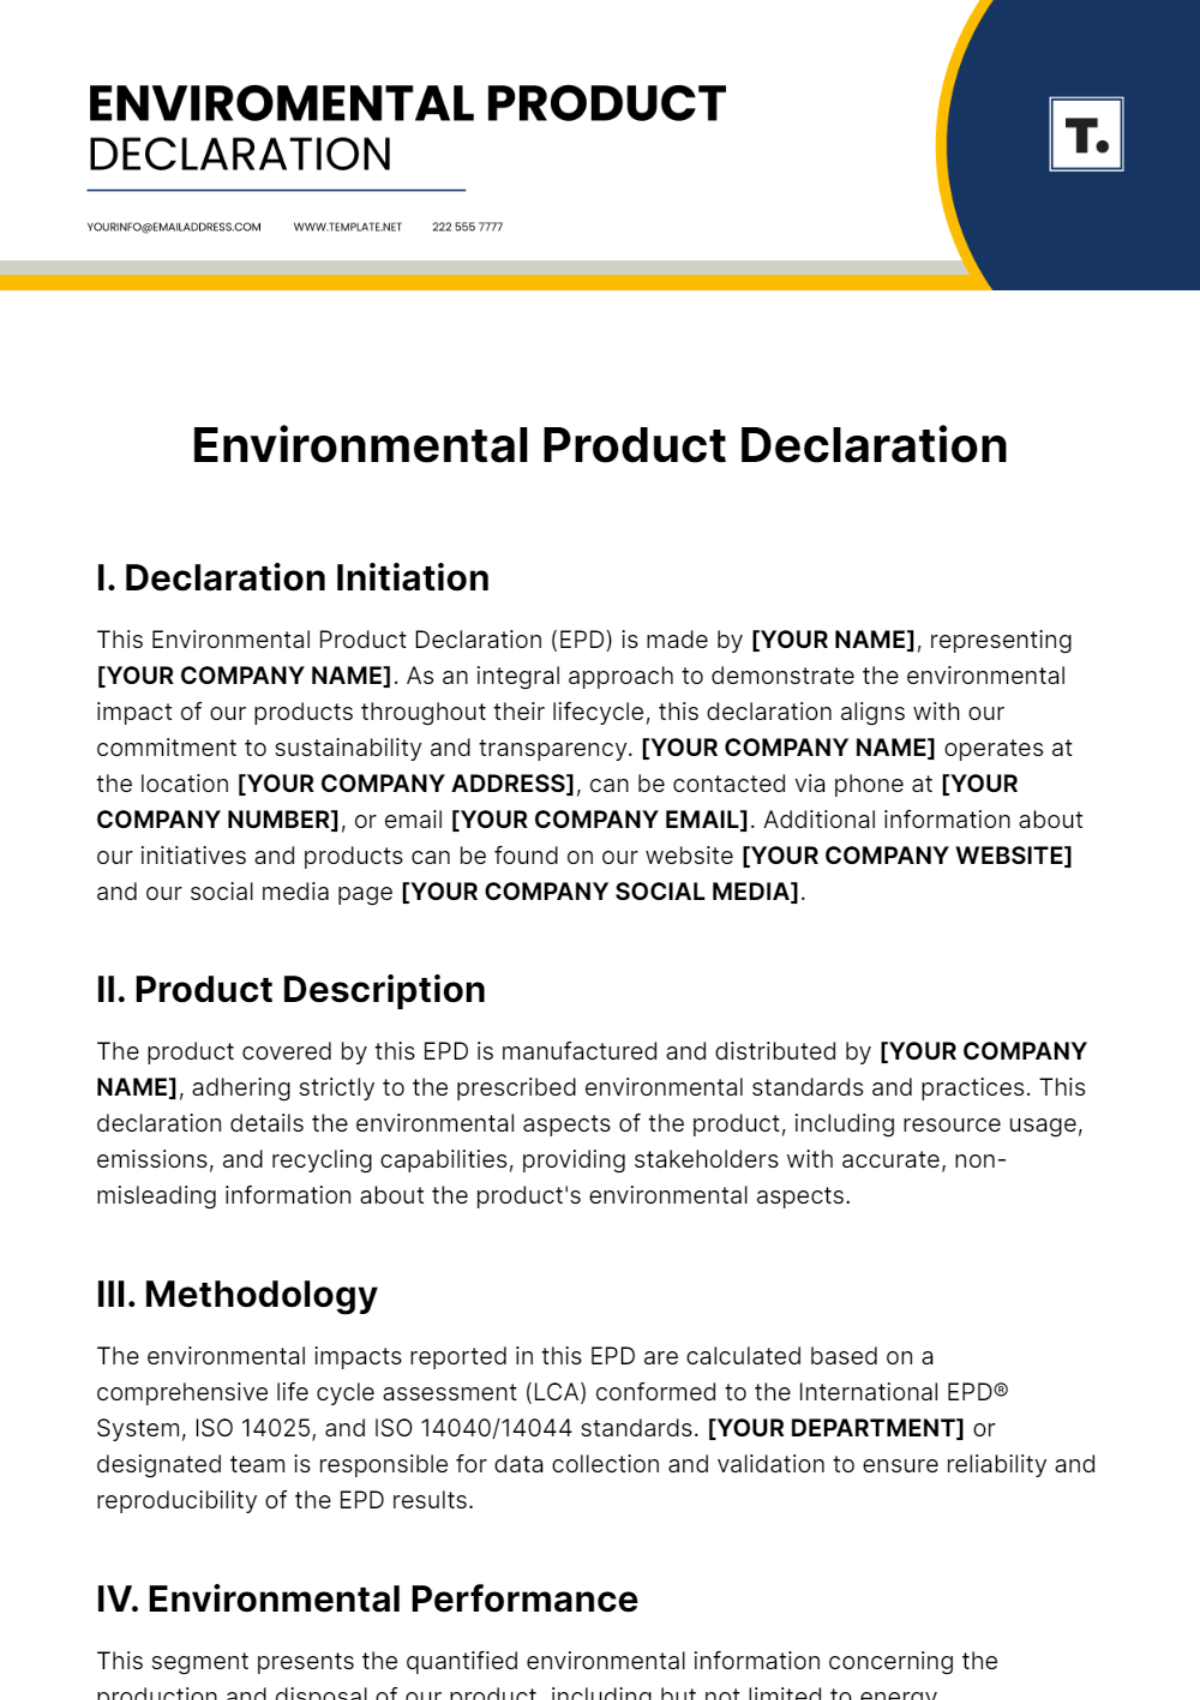 Environmental Product Declaration Template